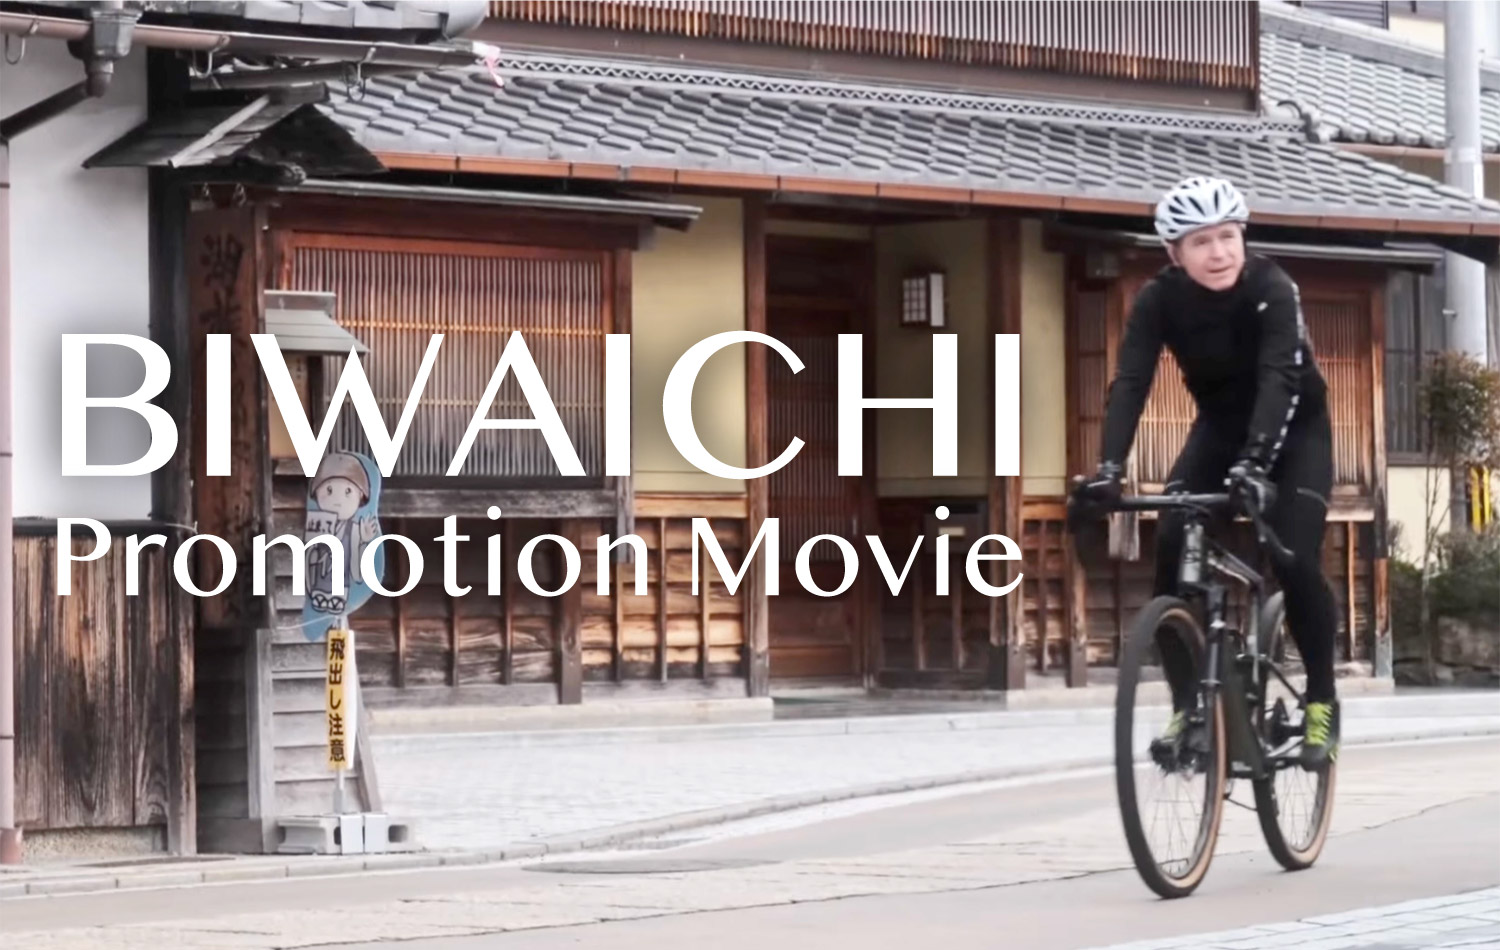 BIWAICHI Promotion Movie